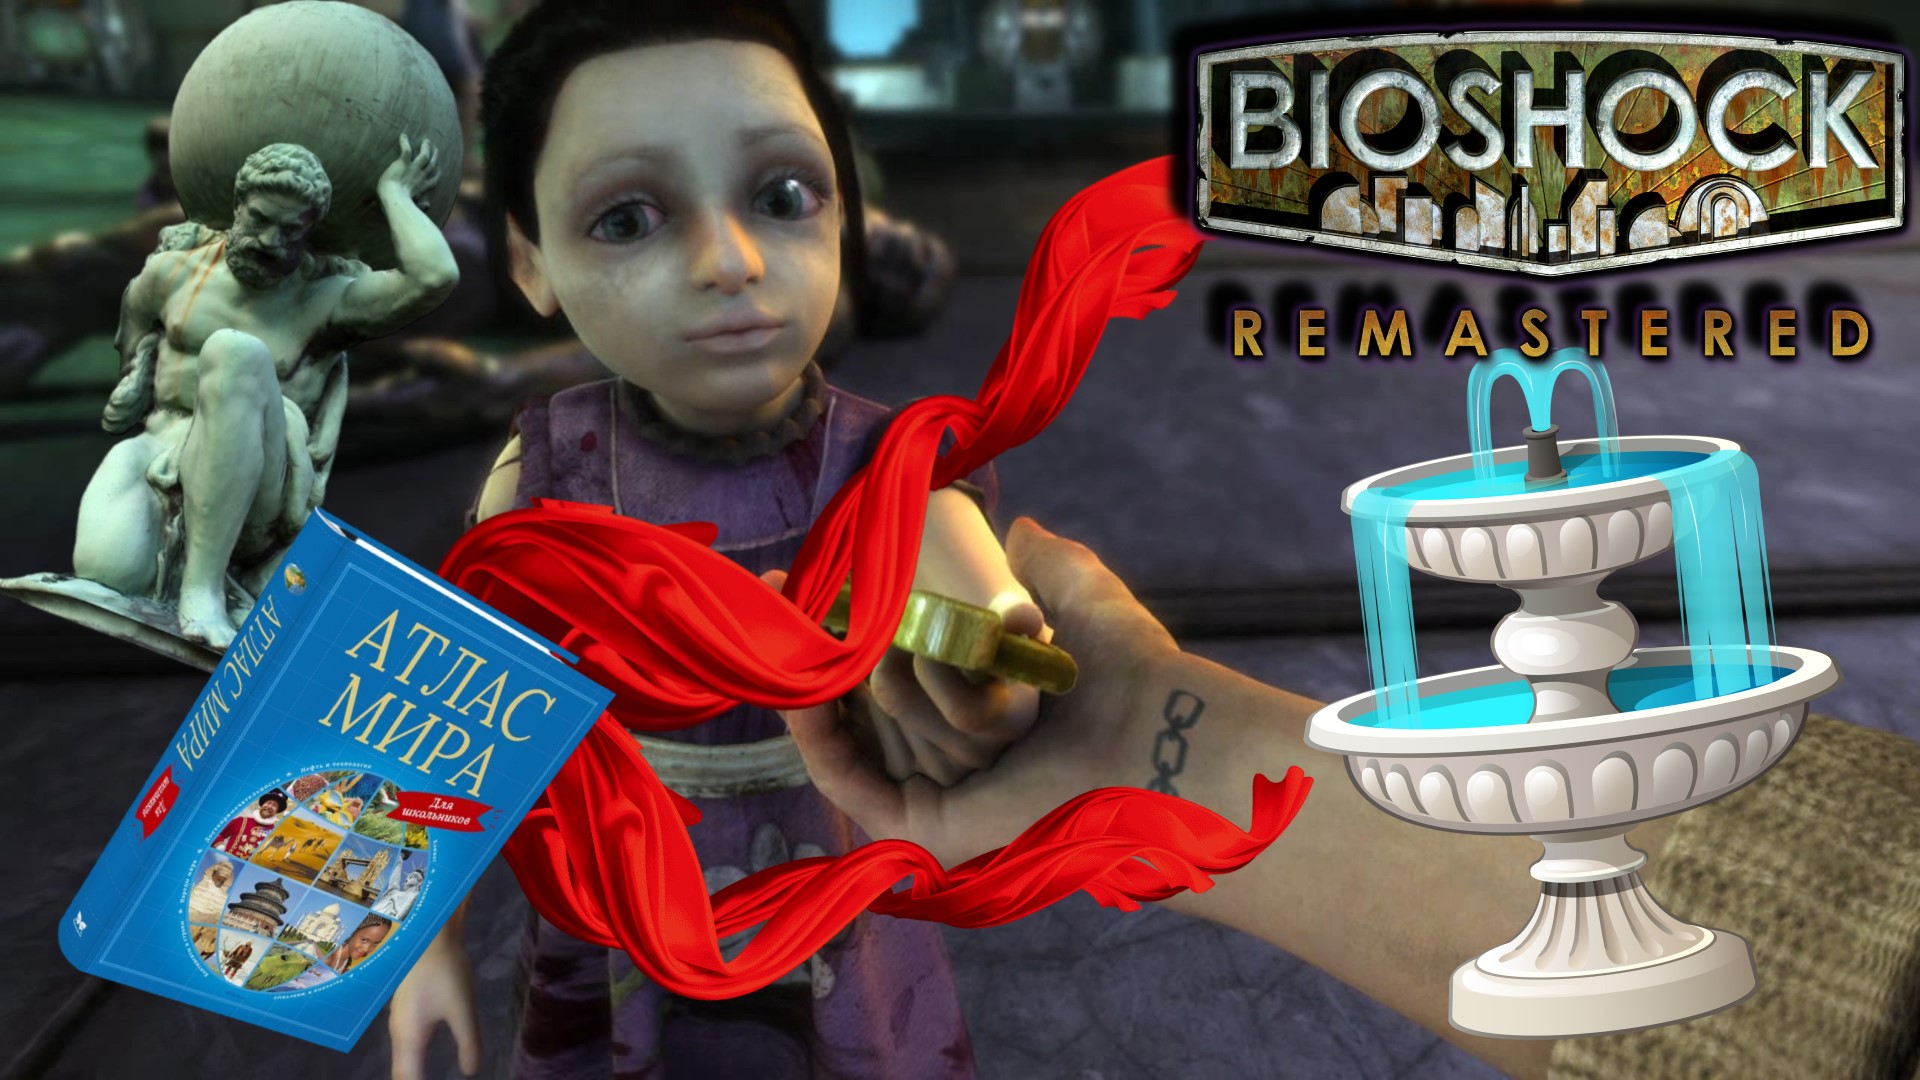 АТЛАНТ ПО ИМЕНИ ФОНТАНЧИК (ФИНАЛ) ▻ BioShock Remastered #21